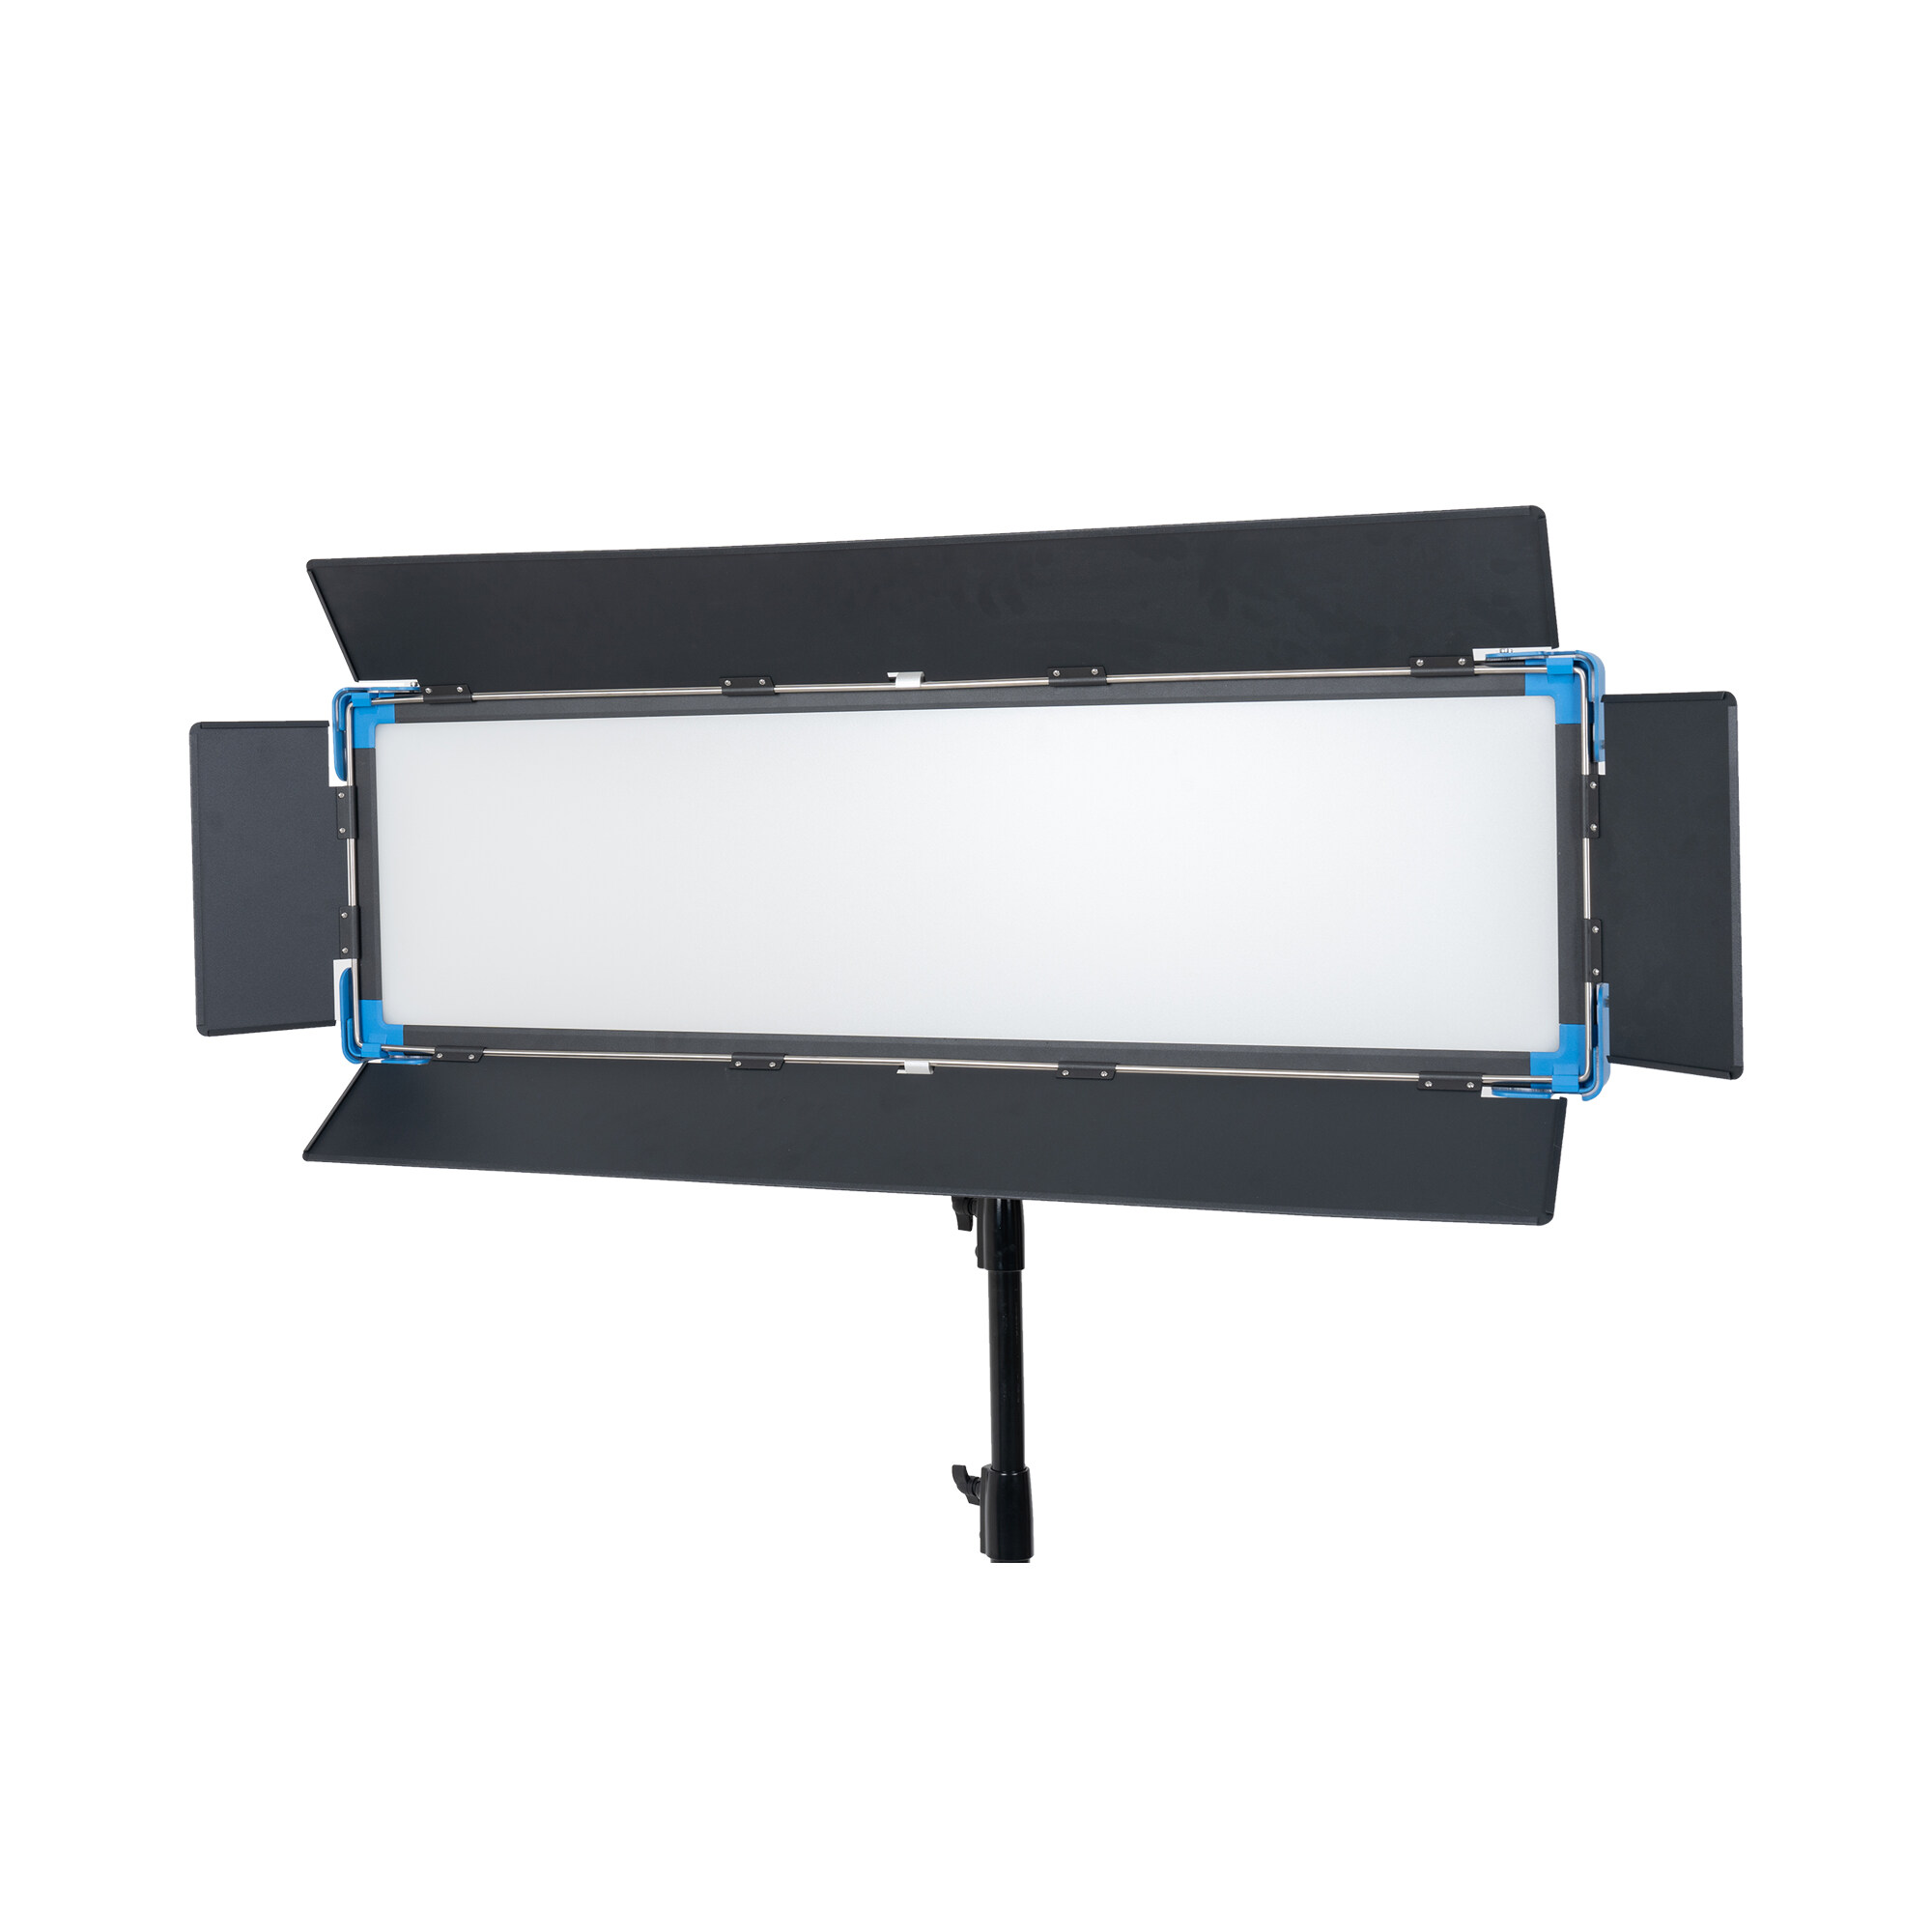 200W C400 high power Studio LED Panel light with LCD Screen